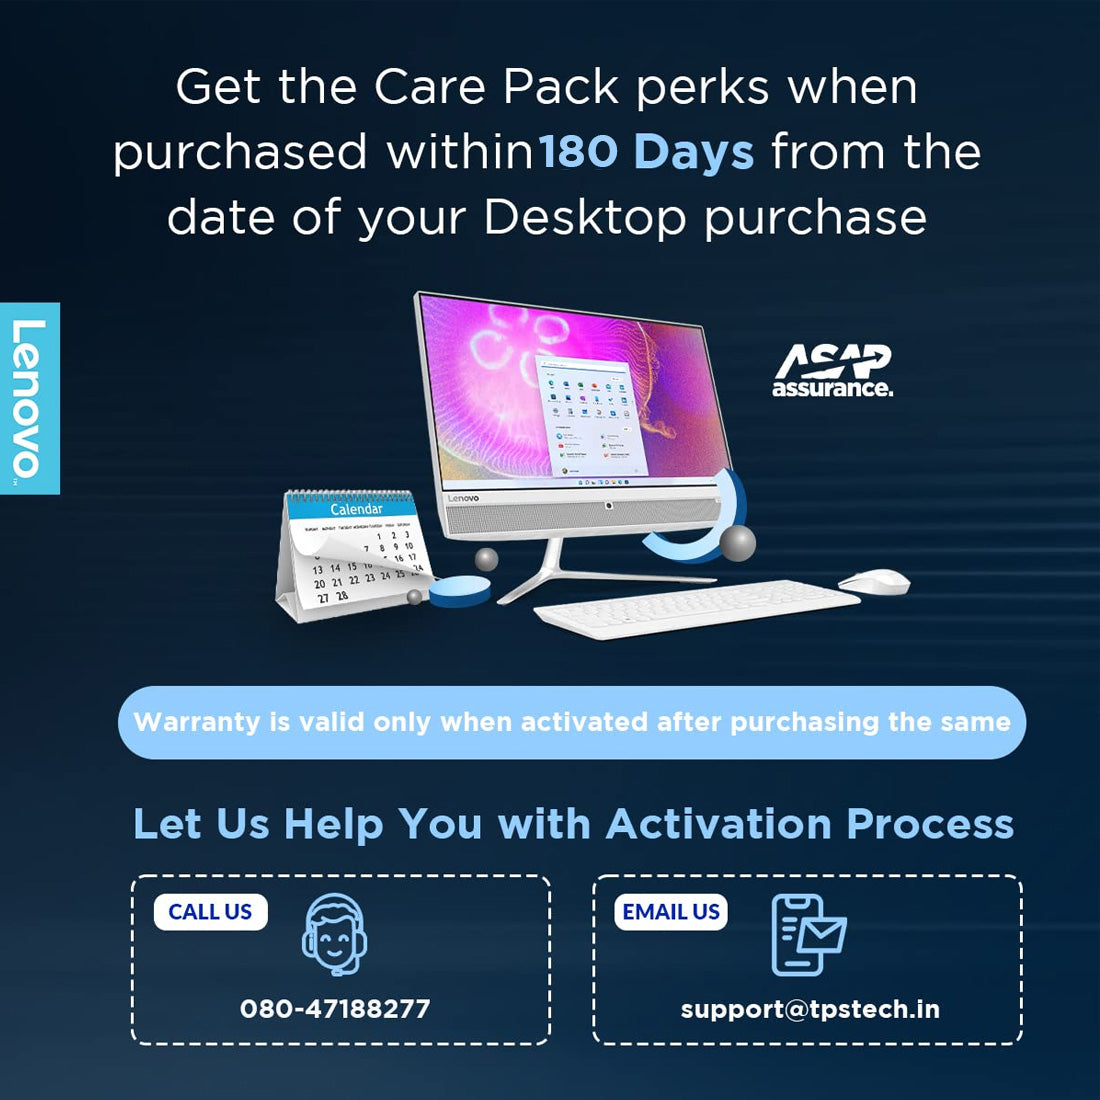 Idea AIO Desktop के लिए Lenovo PremiumCare 1 साल की सपोर्ट वारंटी पैक